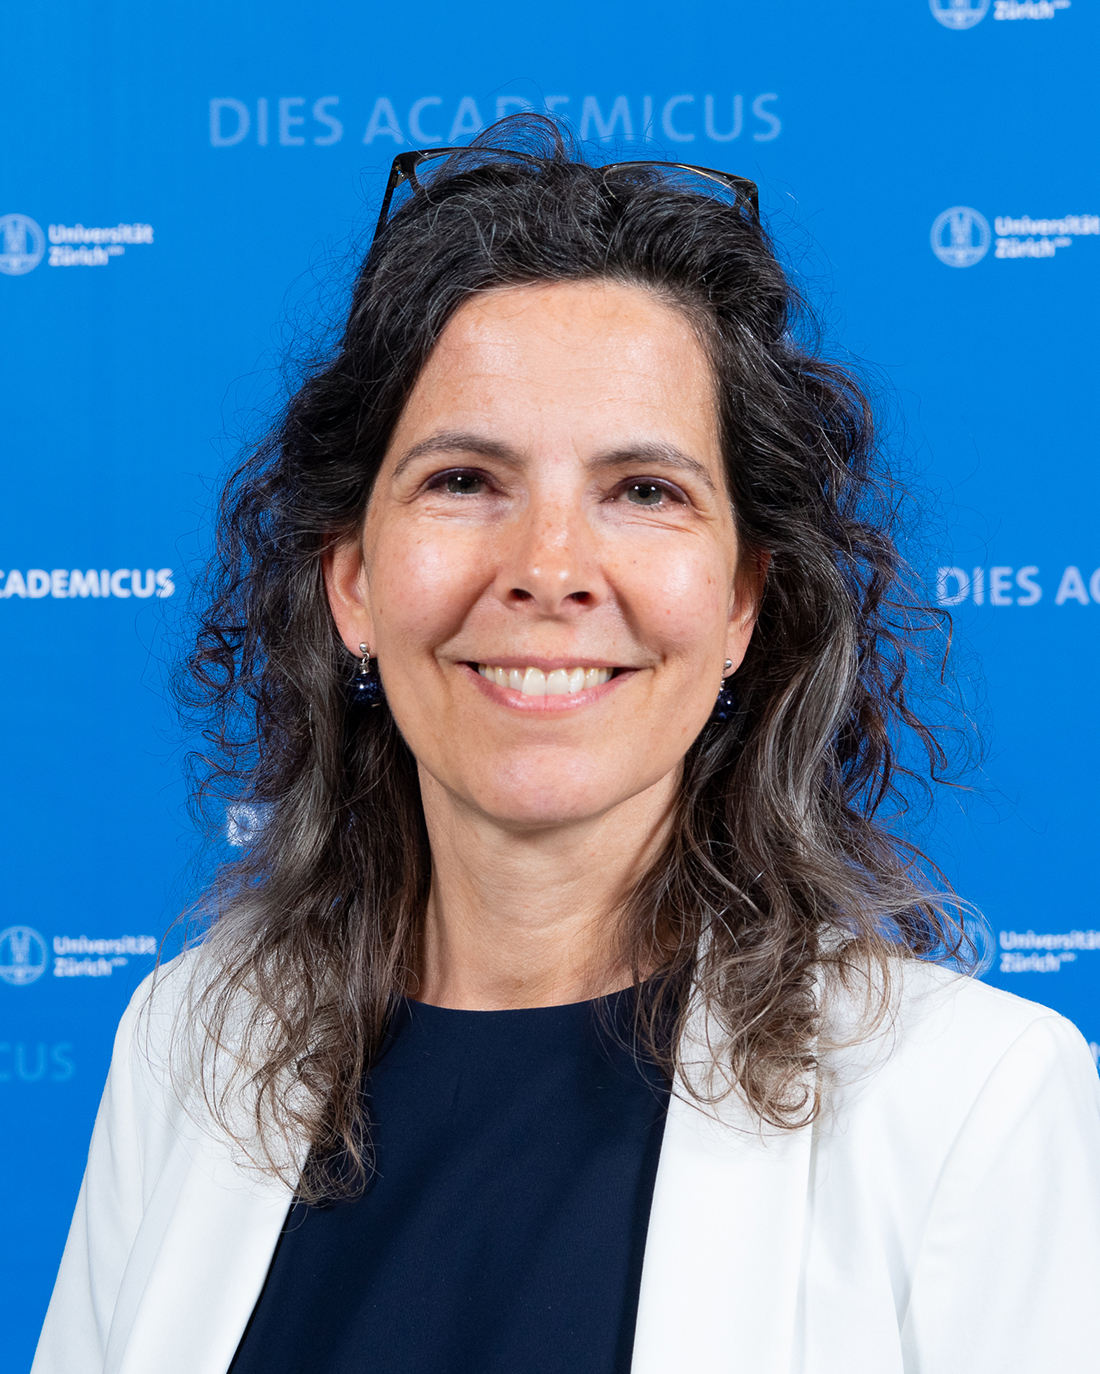 Dr. Debbie Jaarsma 